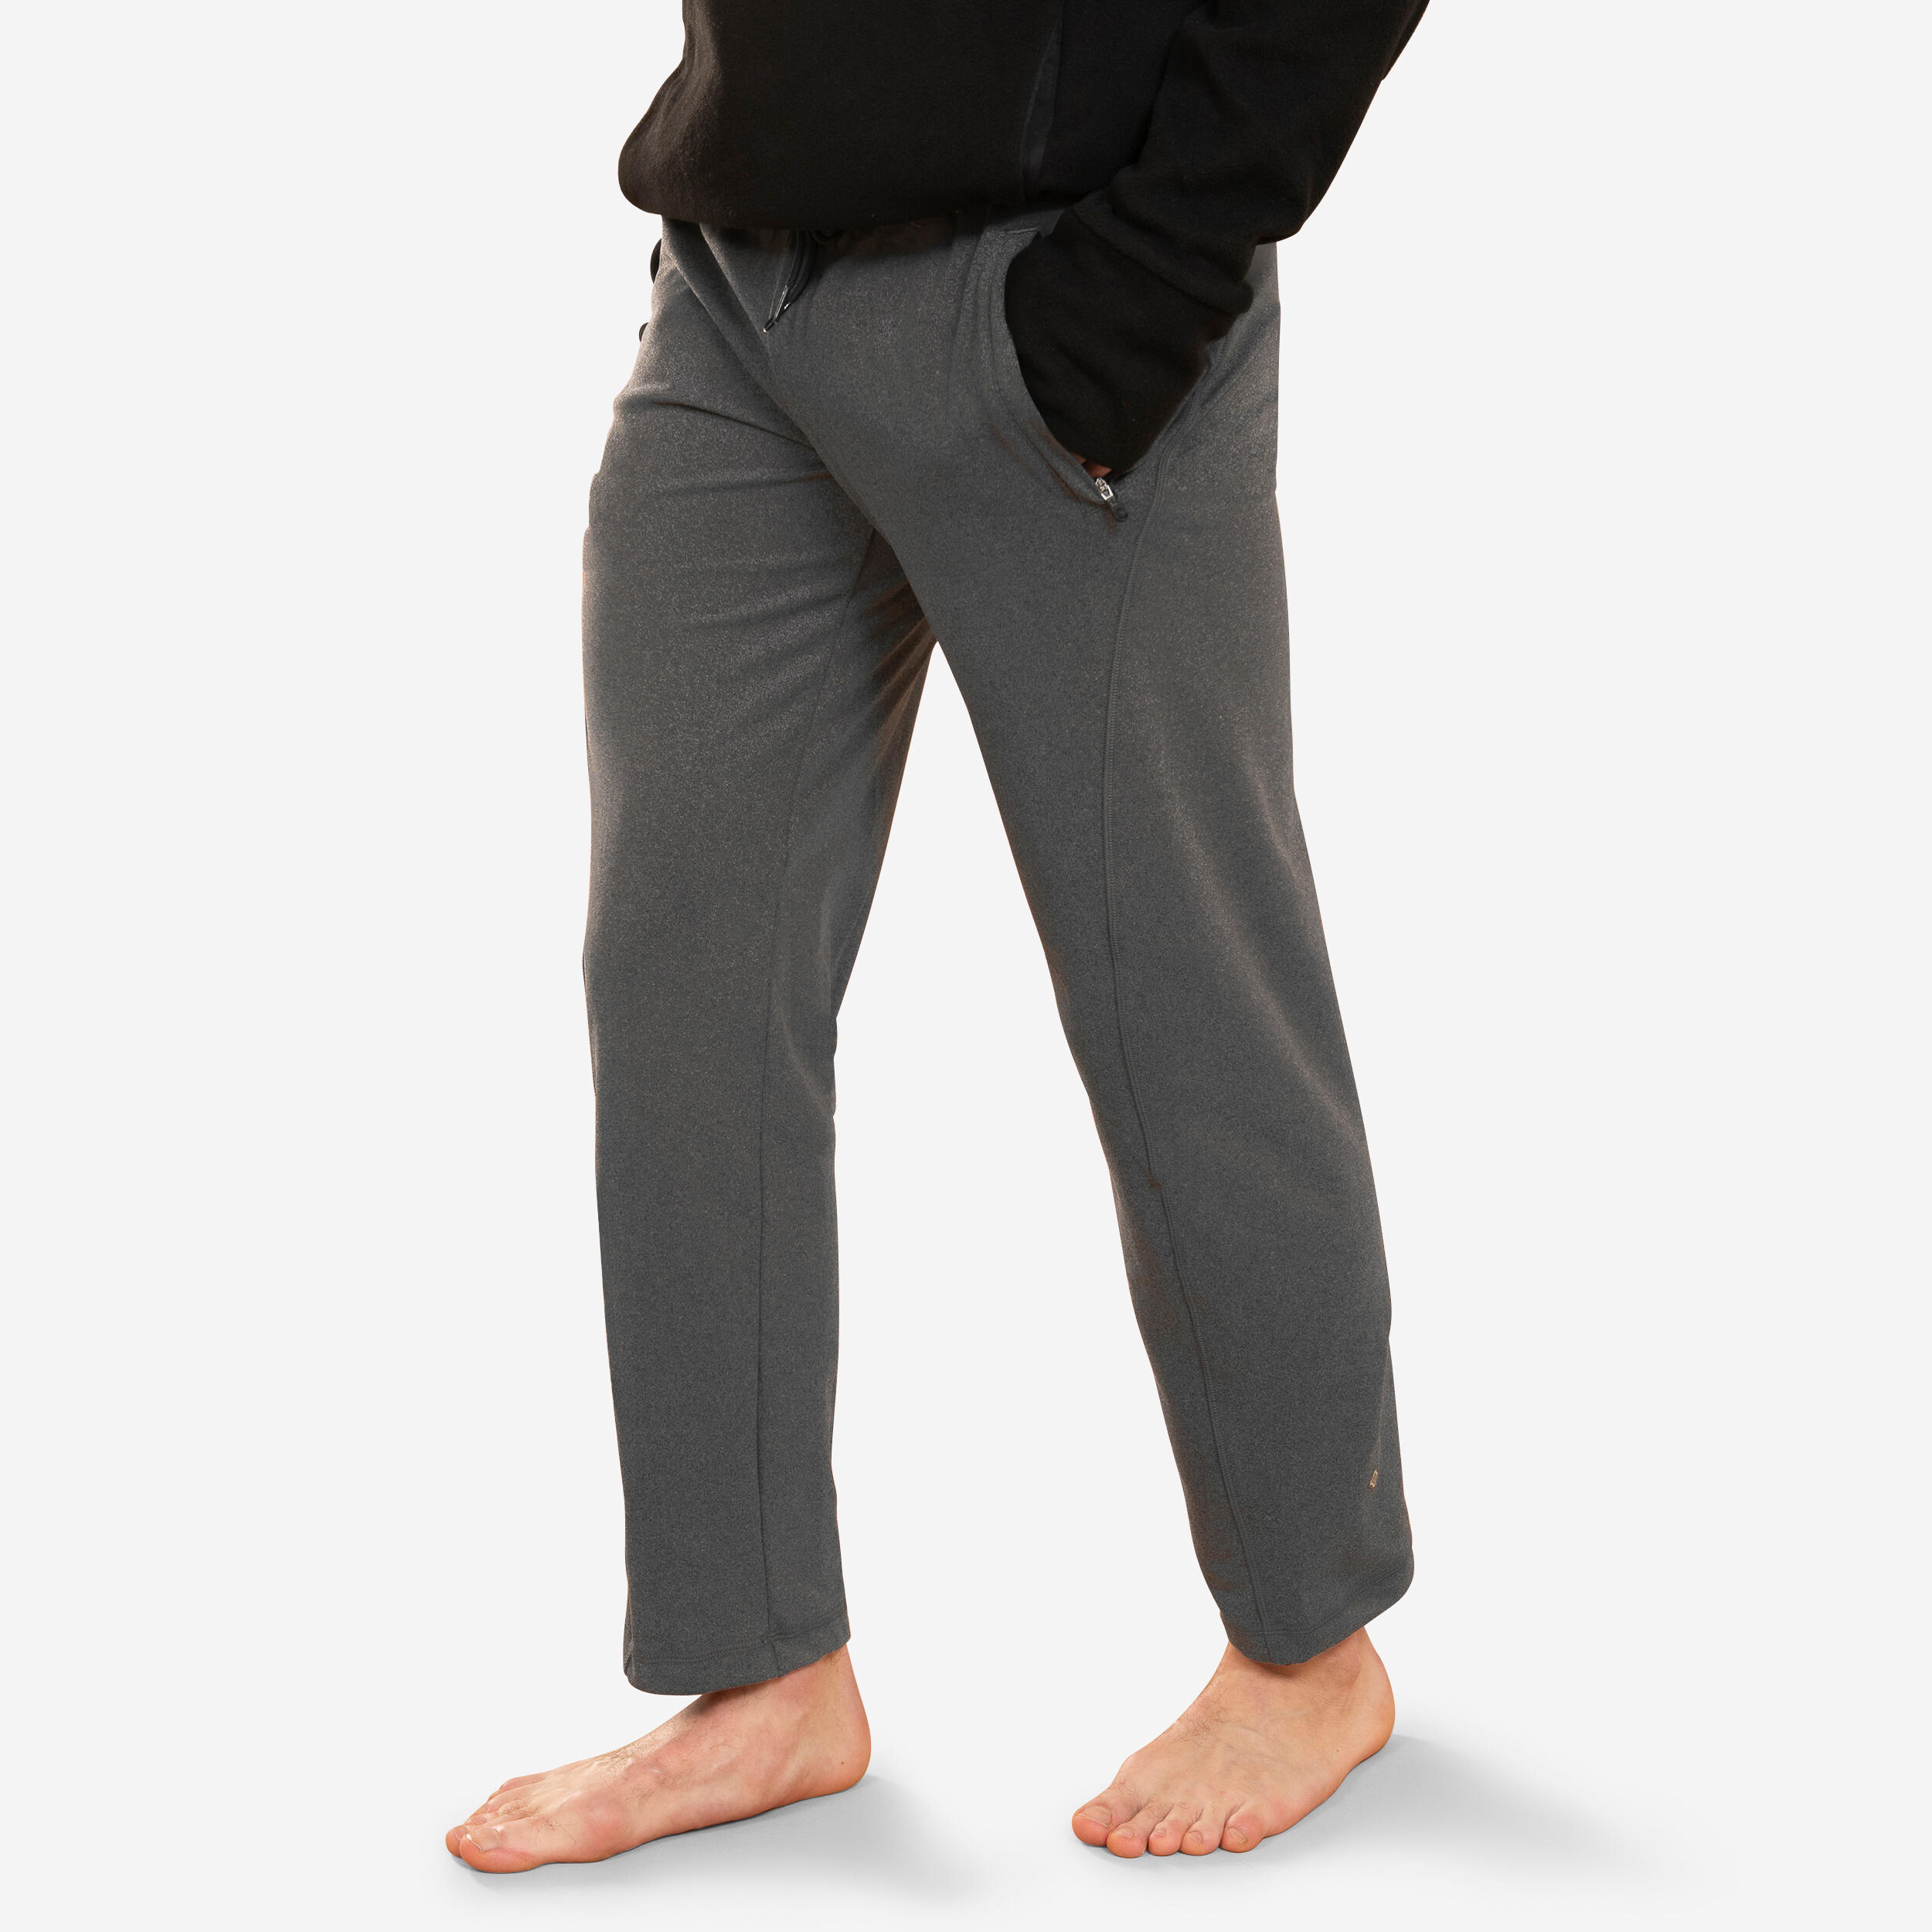 Pantalon de yoga homme – gris - KIMJALY